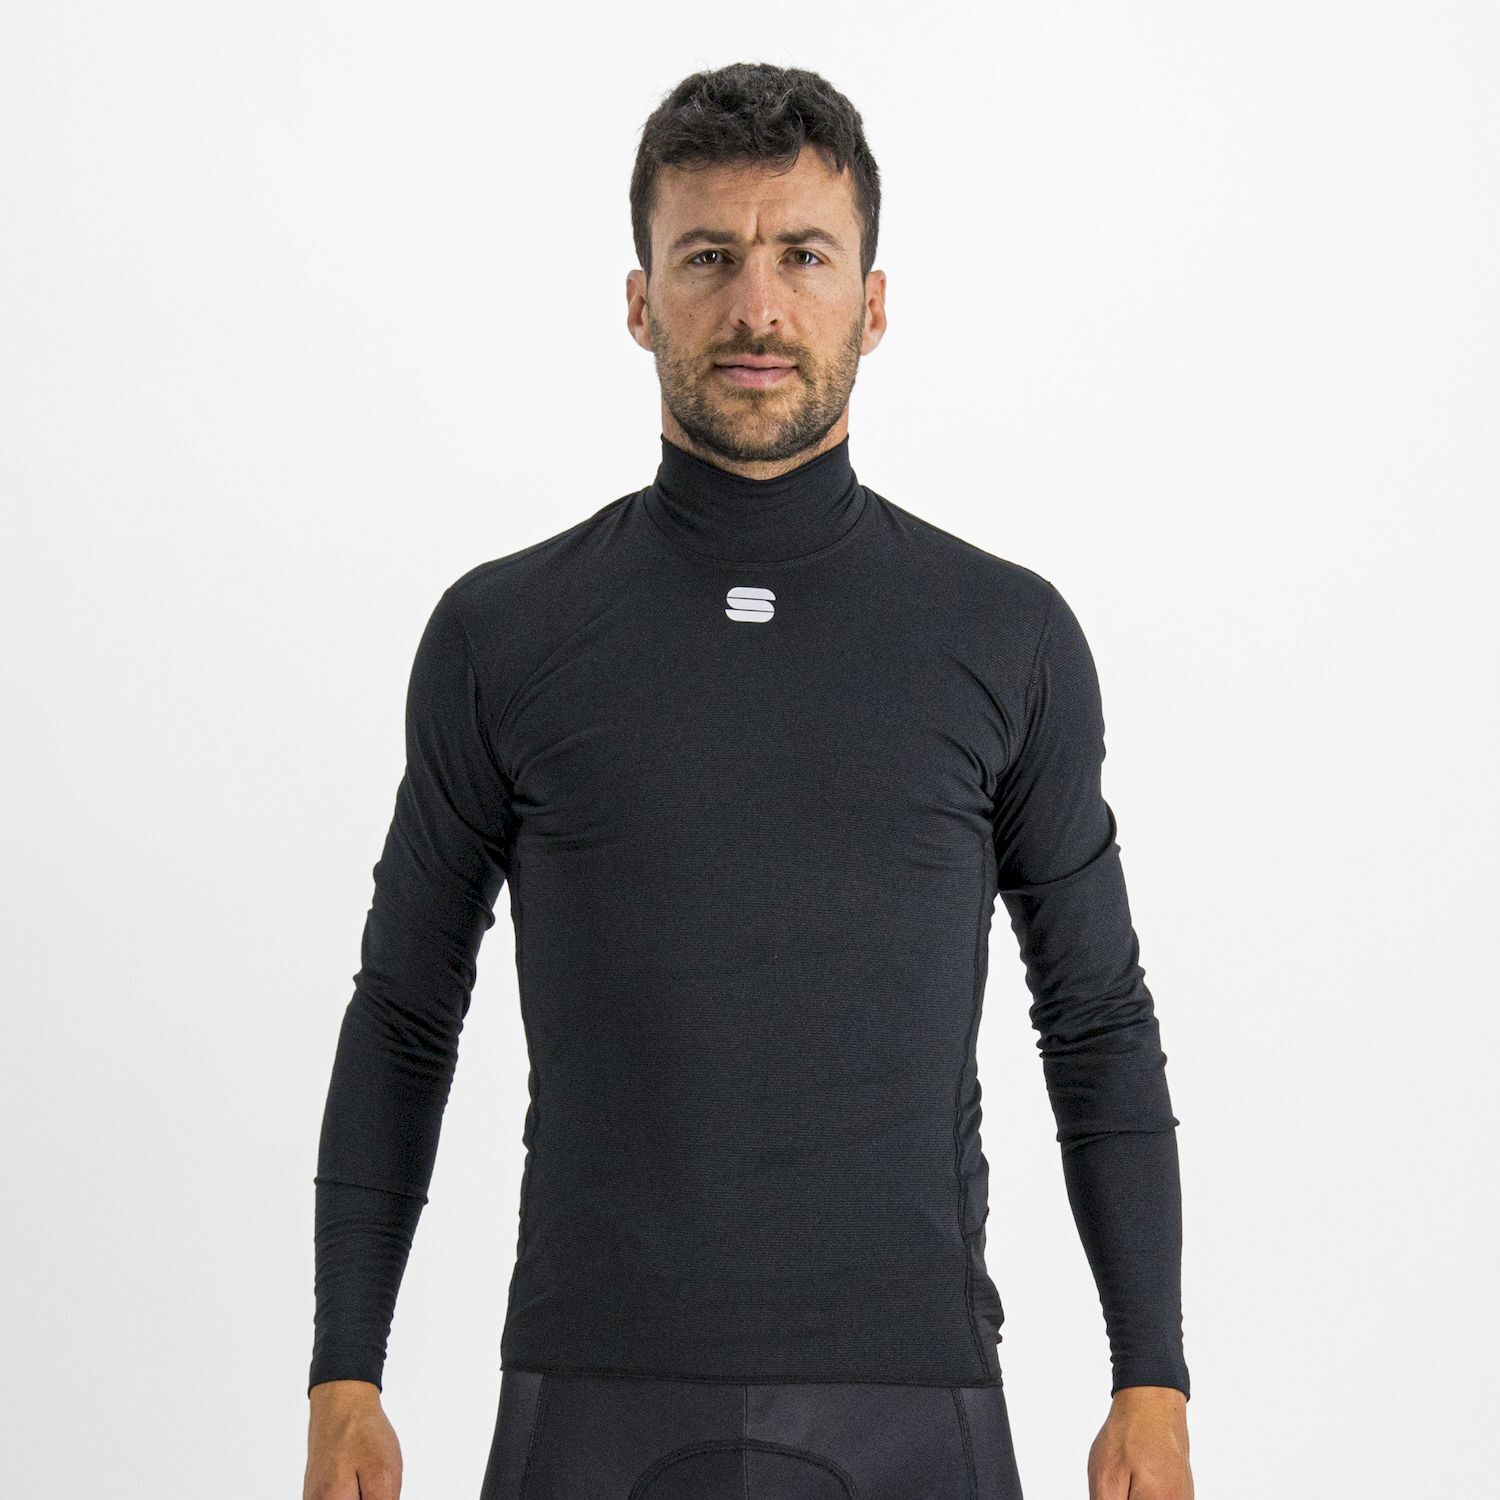 Sportful Sottozero Baselayer Jersey Long Sleeves - Ropa interior - Hombre